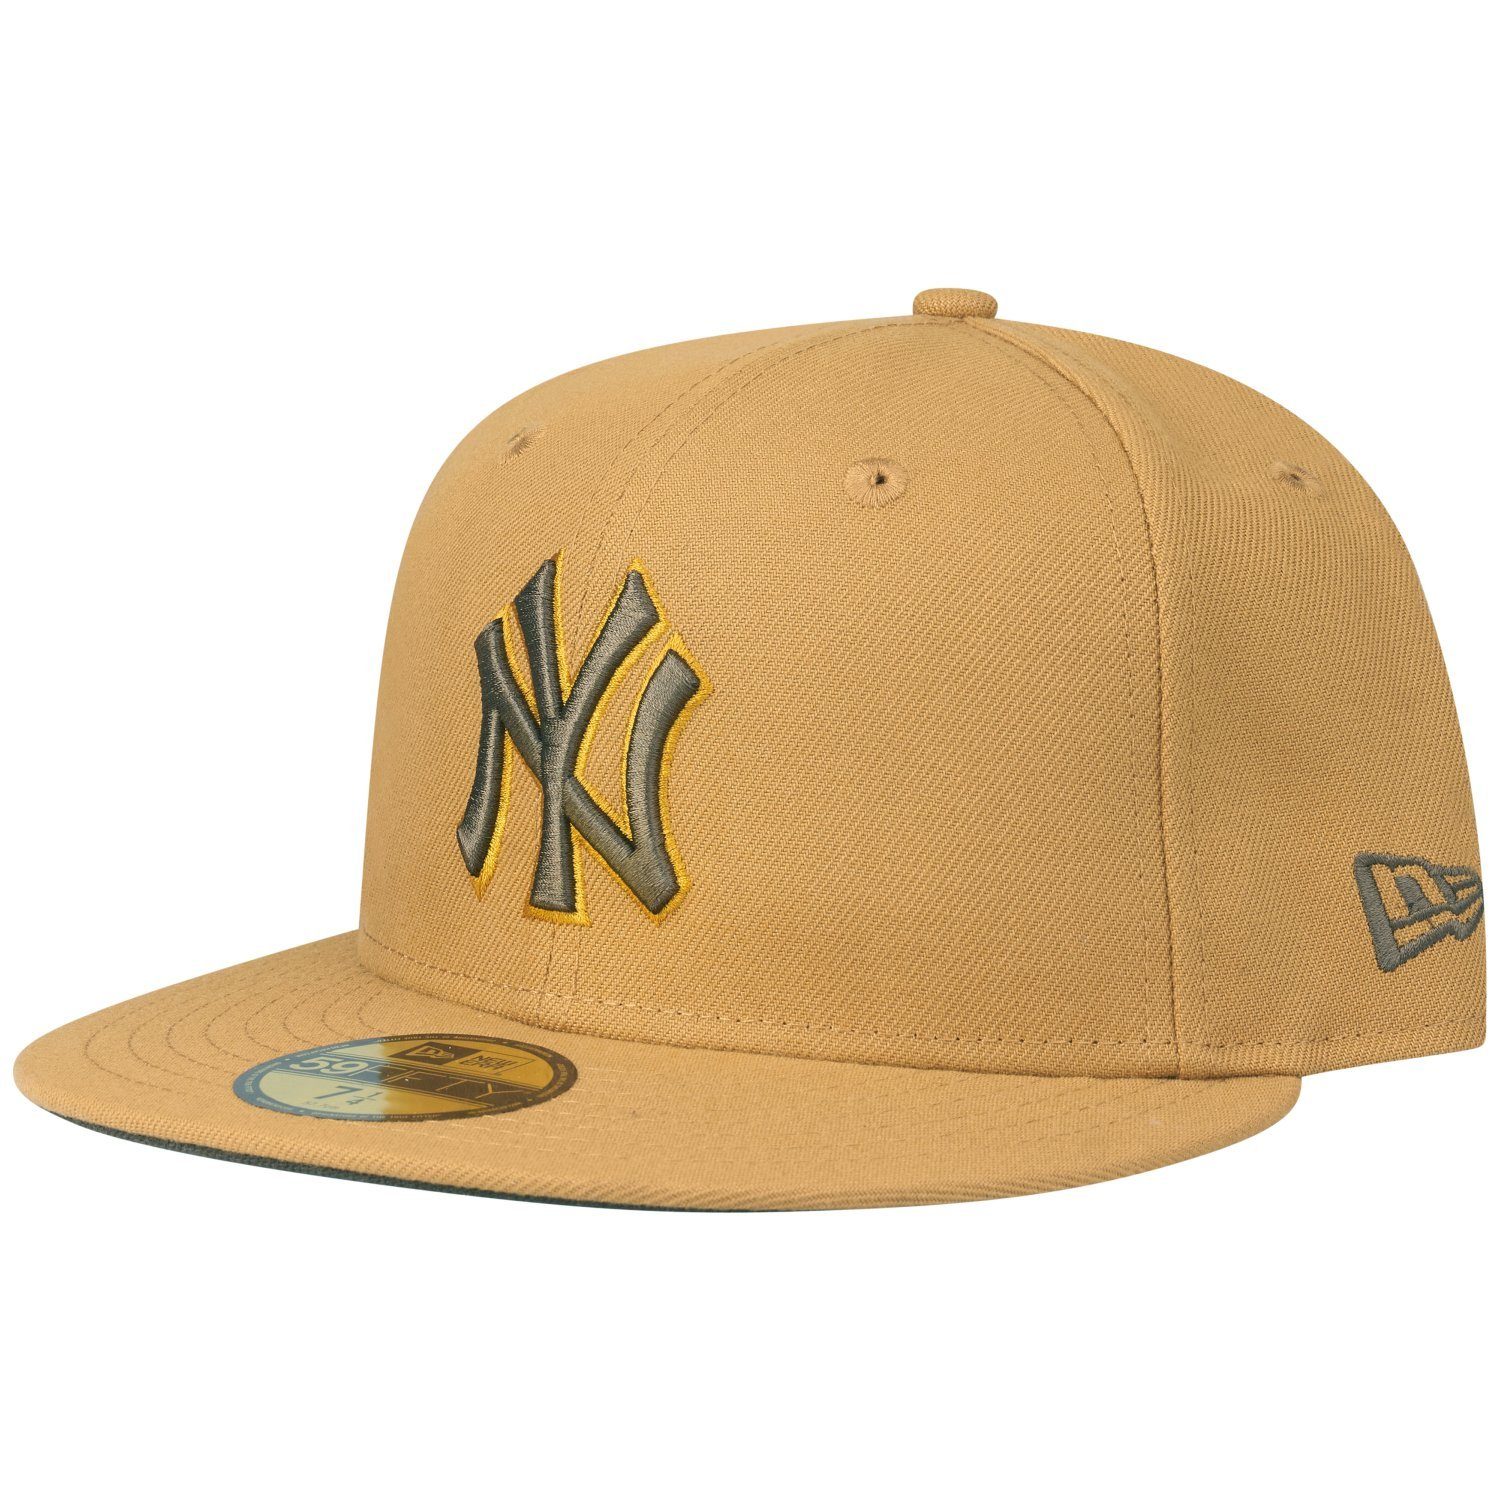 New Era Fitted Cap 59Fifty New York Yankees panama